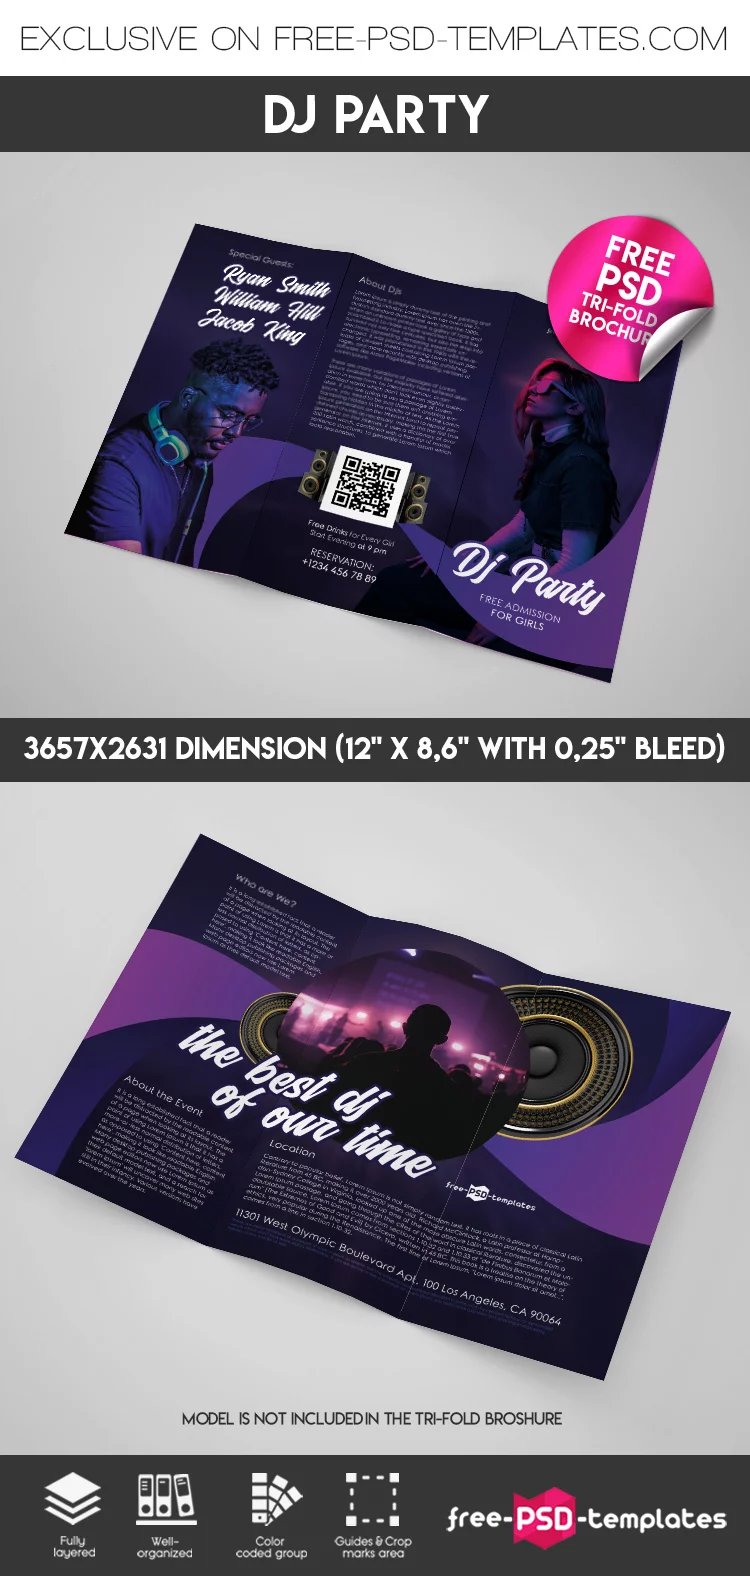 Free DJ Party Tri-Fold Brochure in PSD